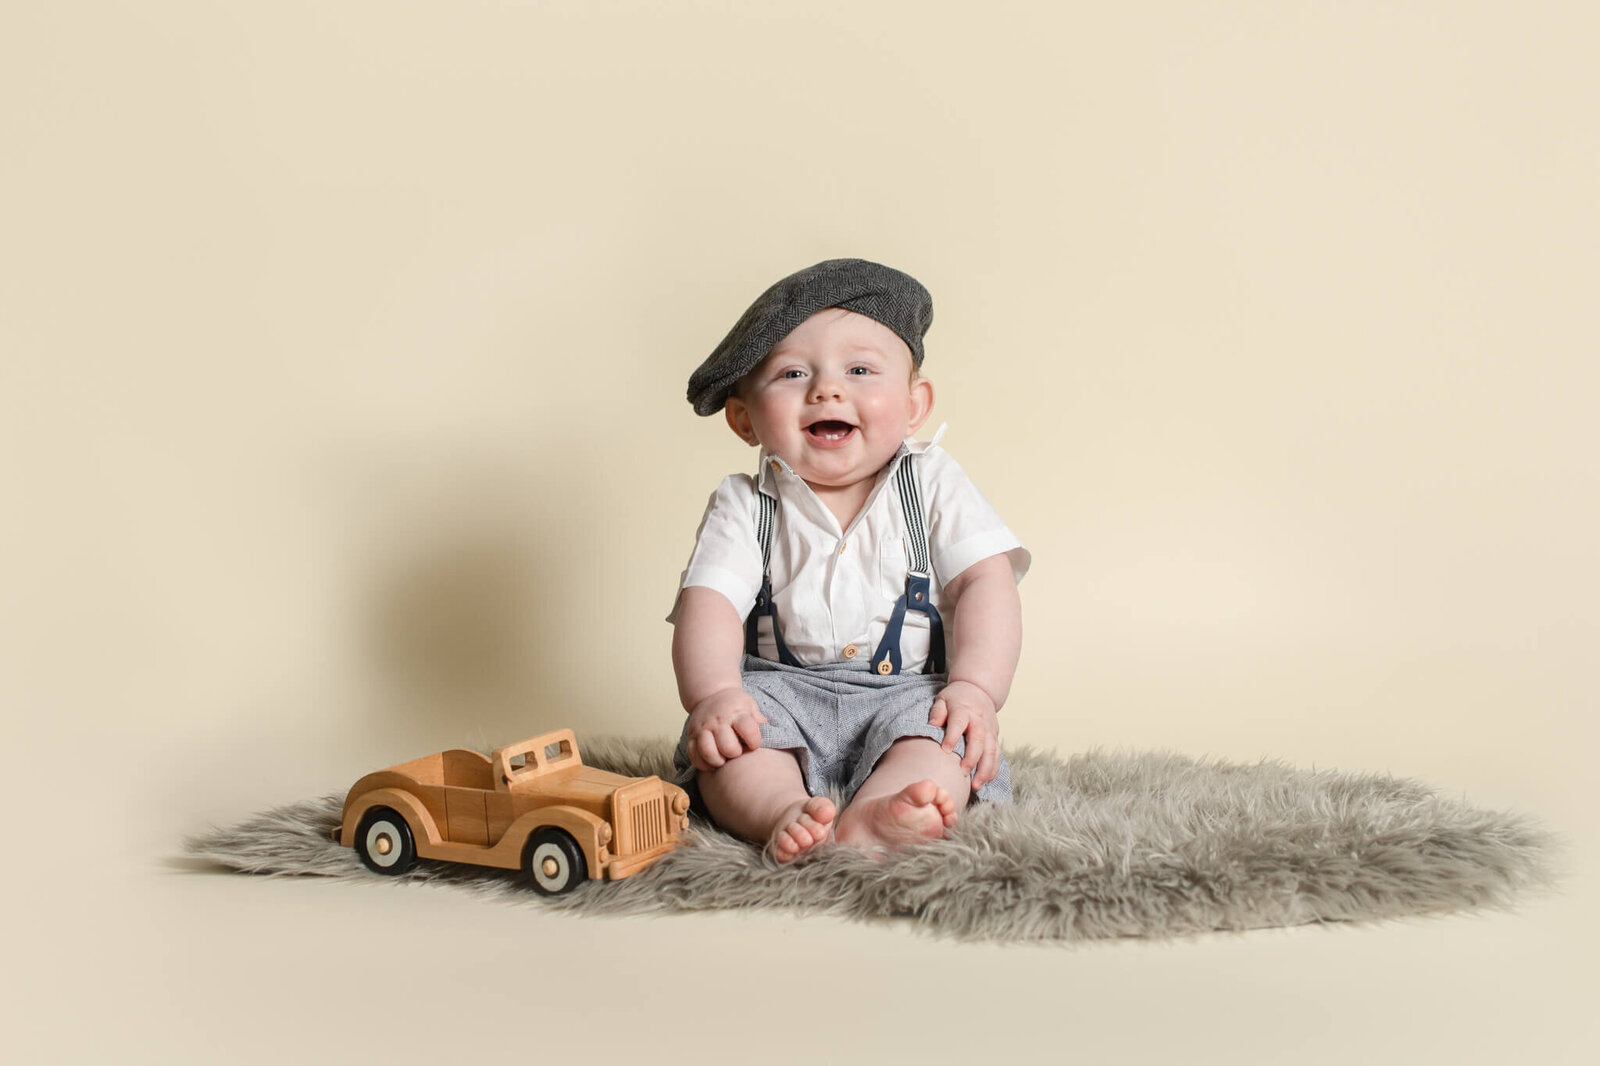 Baby boy in studio smiling sitting on gray flokati rug